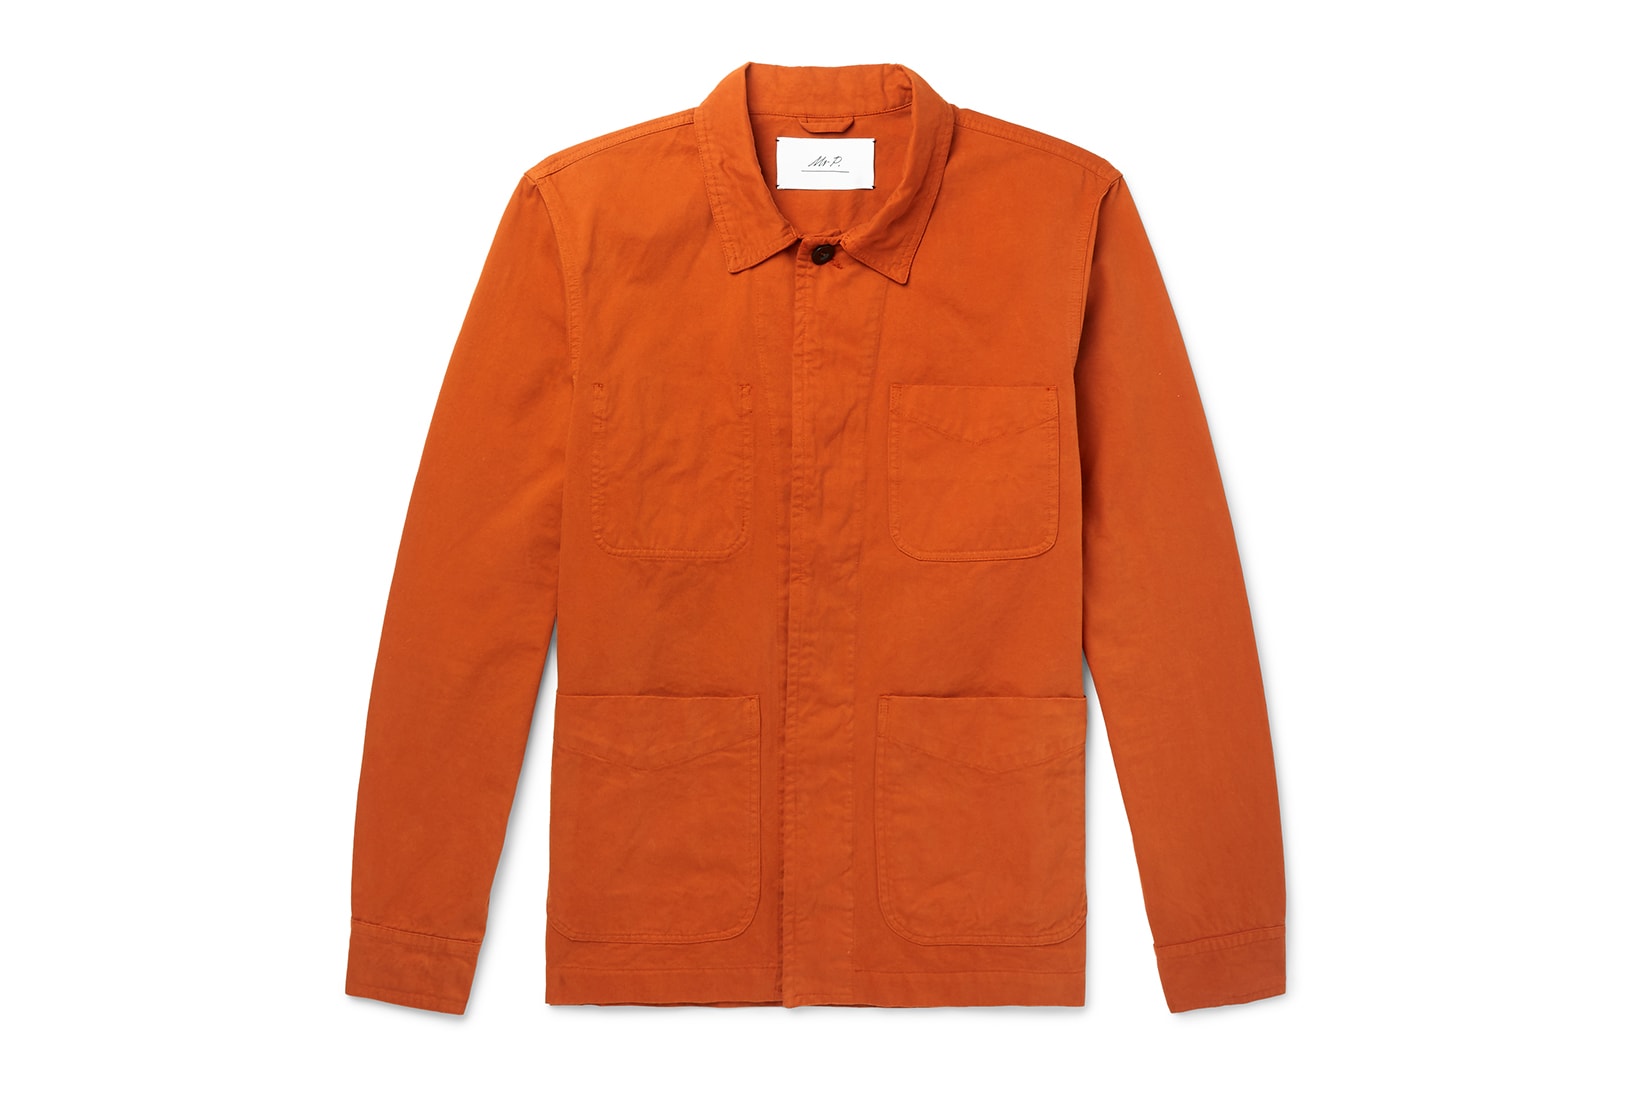 Mr P. MR PORTER Spring 2018 Third Collection Orange Navy Black White Jacket Polo Shirts Retailer